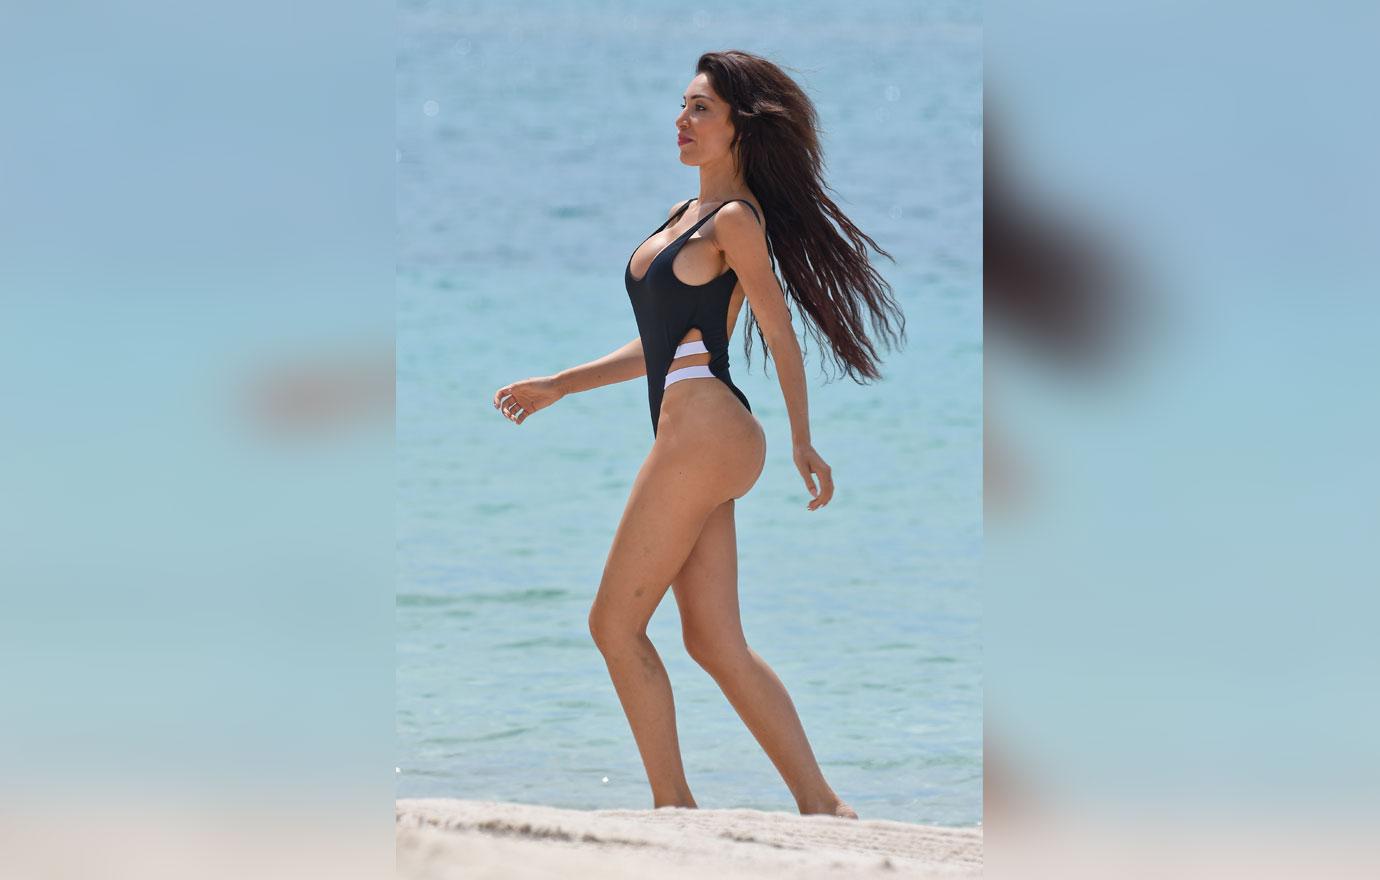 Farrah Abraham Wears Thong Bikini On Beach In Florida: Pics – Hollywood Life